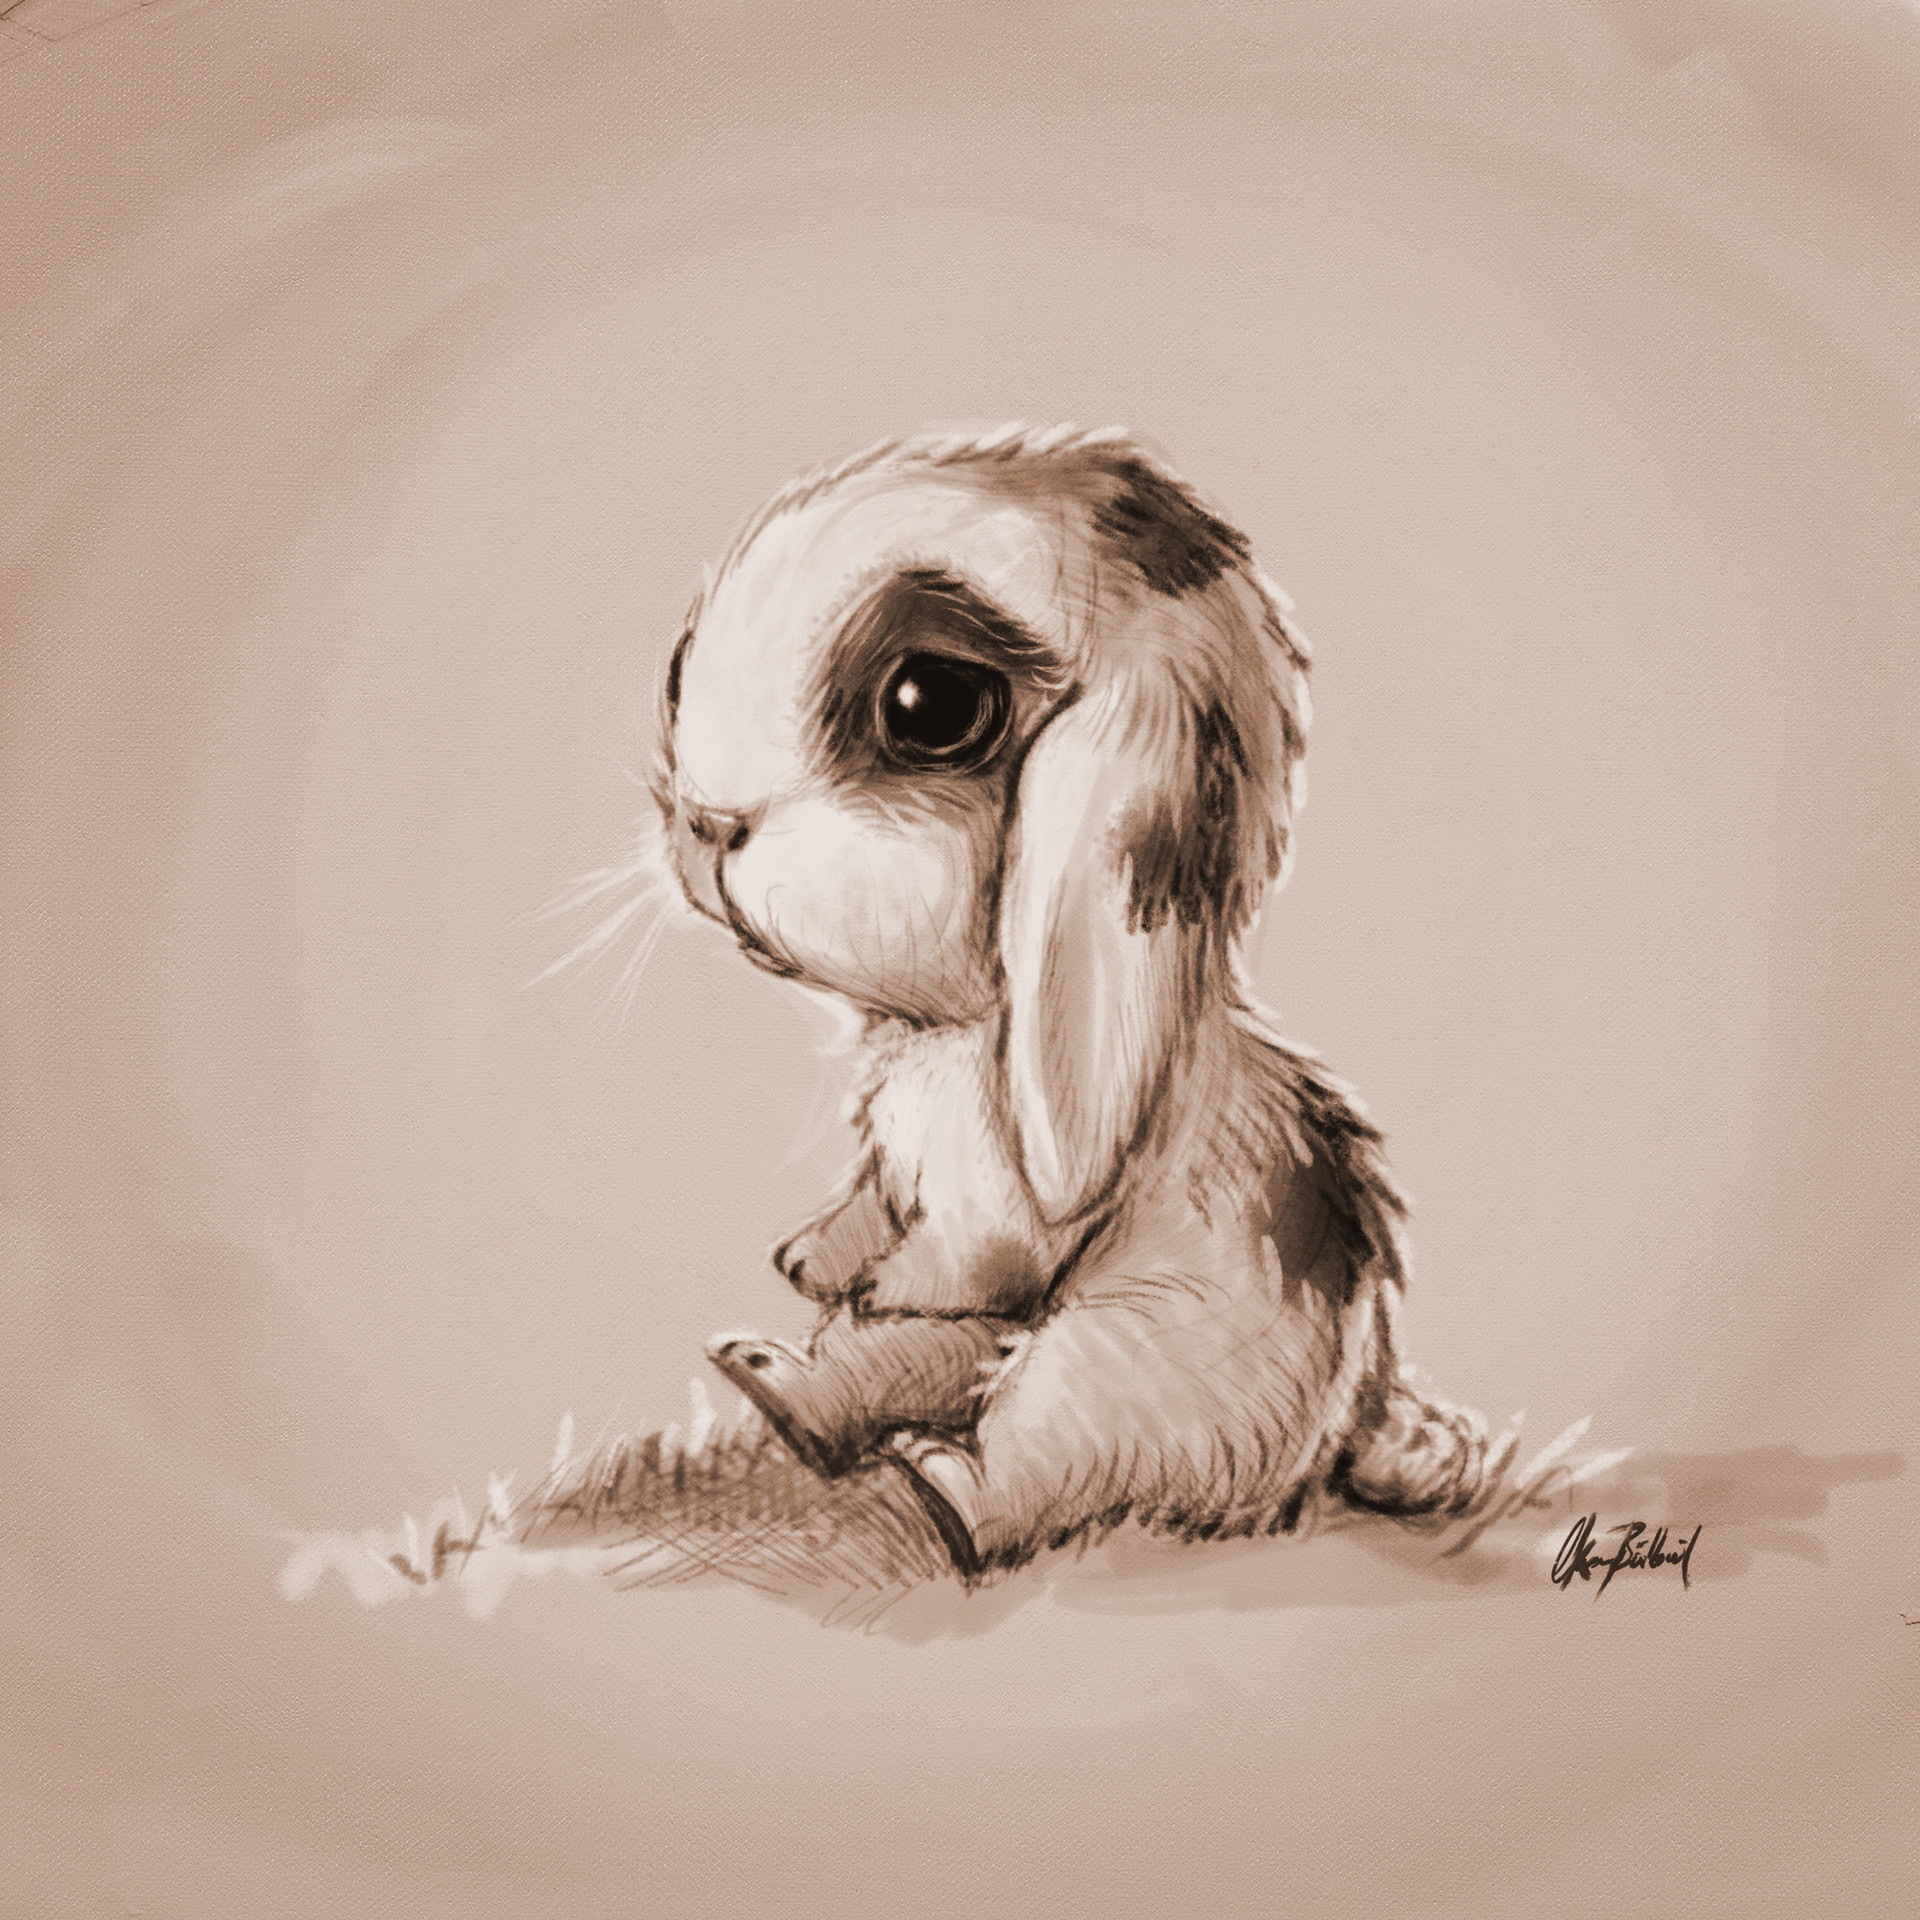 Okan Bülbül - Lonely bunny